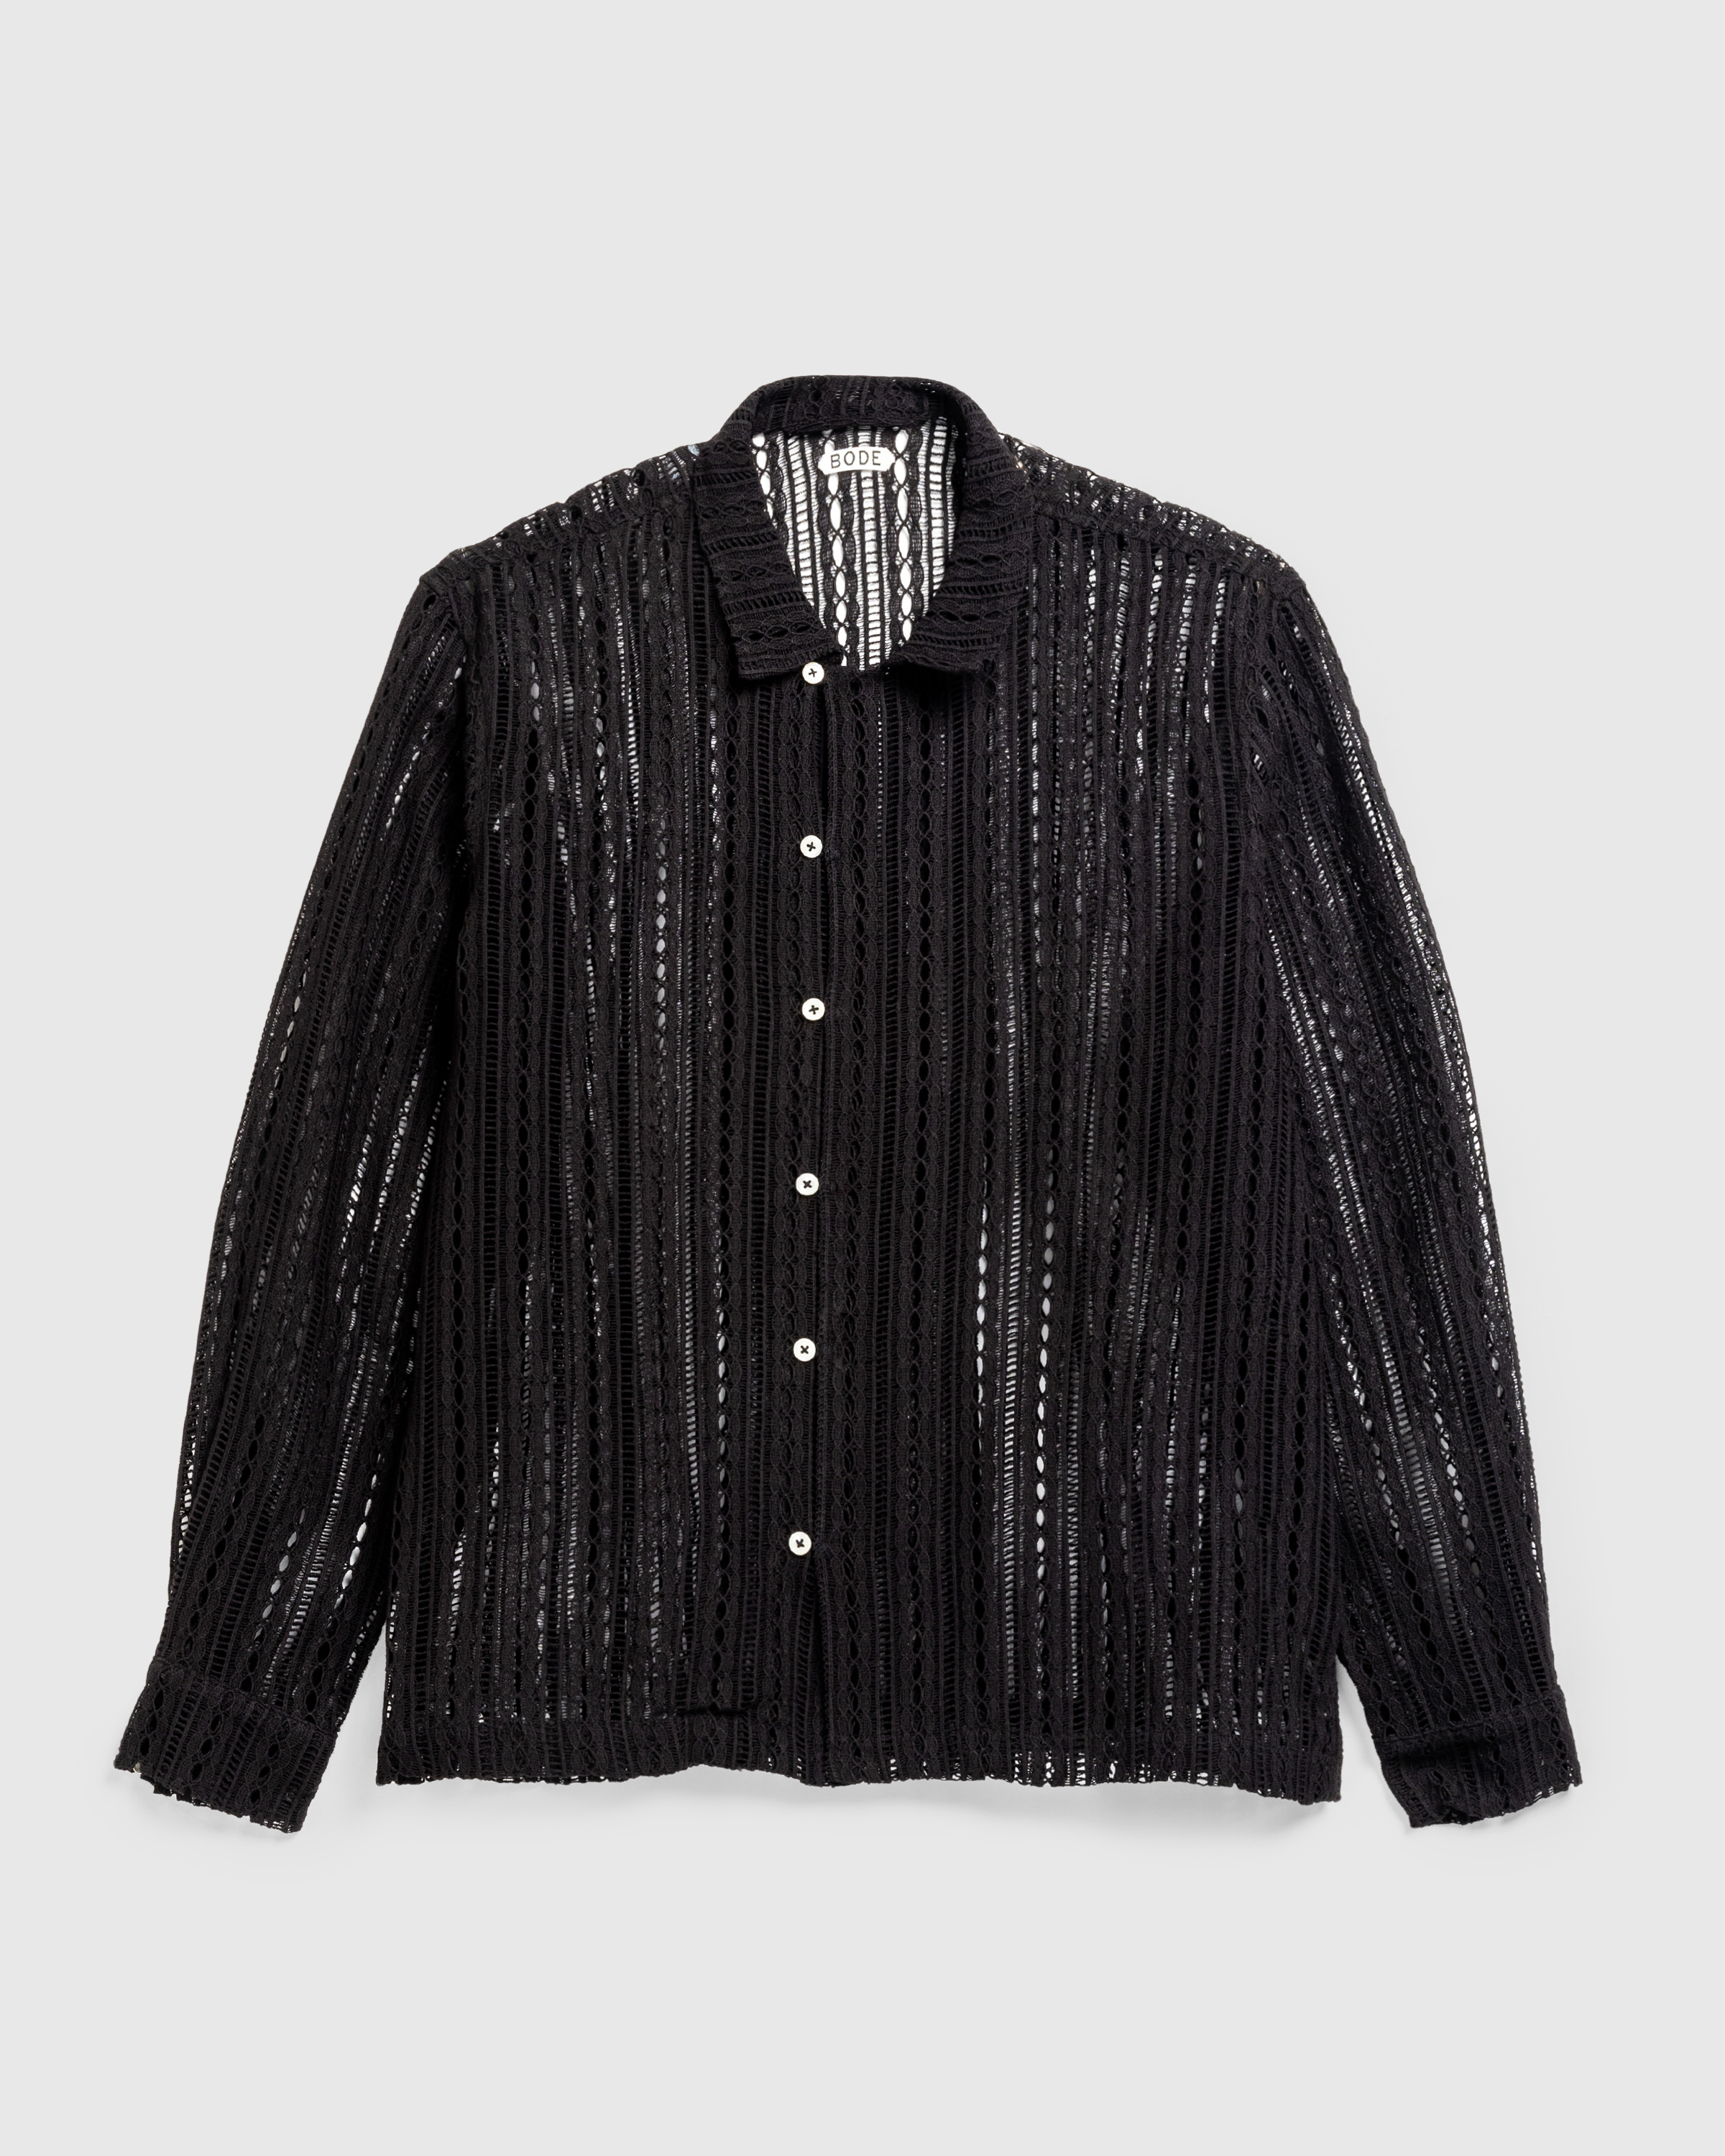 Bode – Meandering Lace Long-Sleeve Shirt Black - Longsleeve Shirts - Black - Image 1